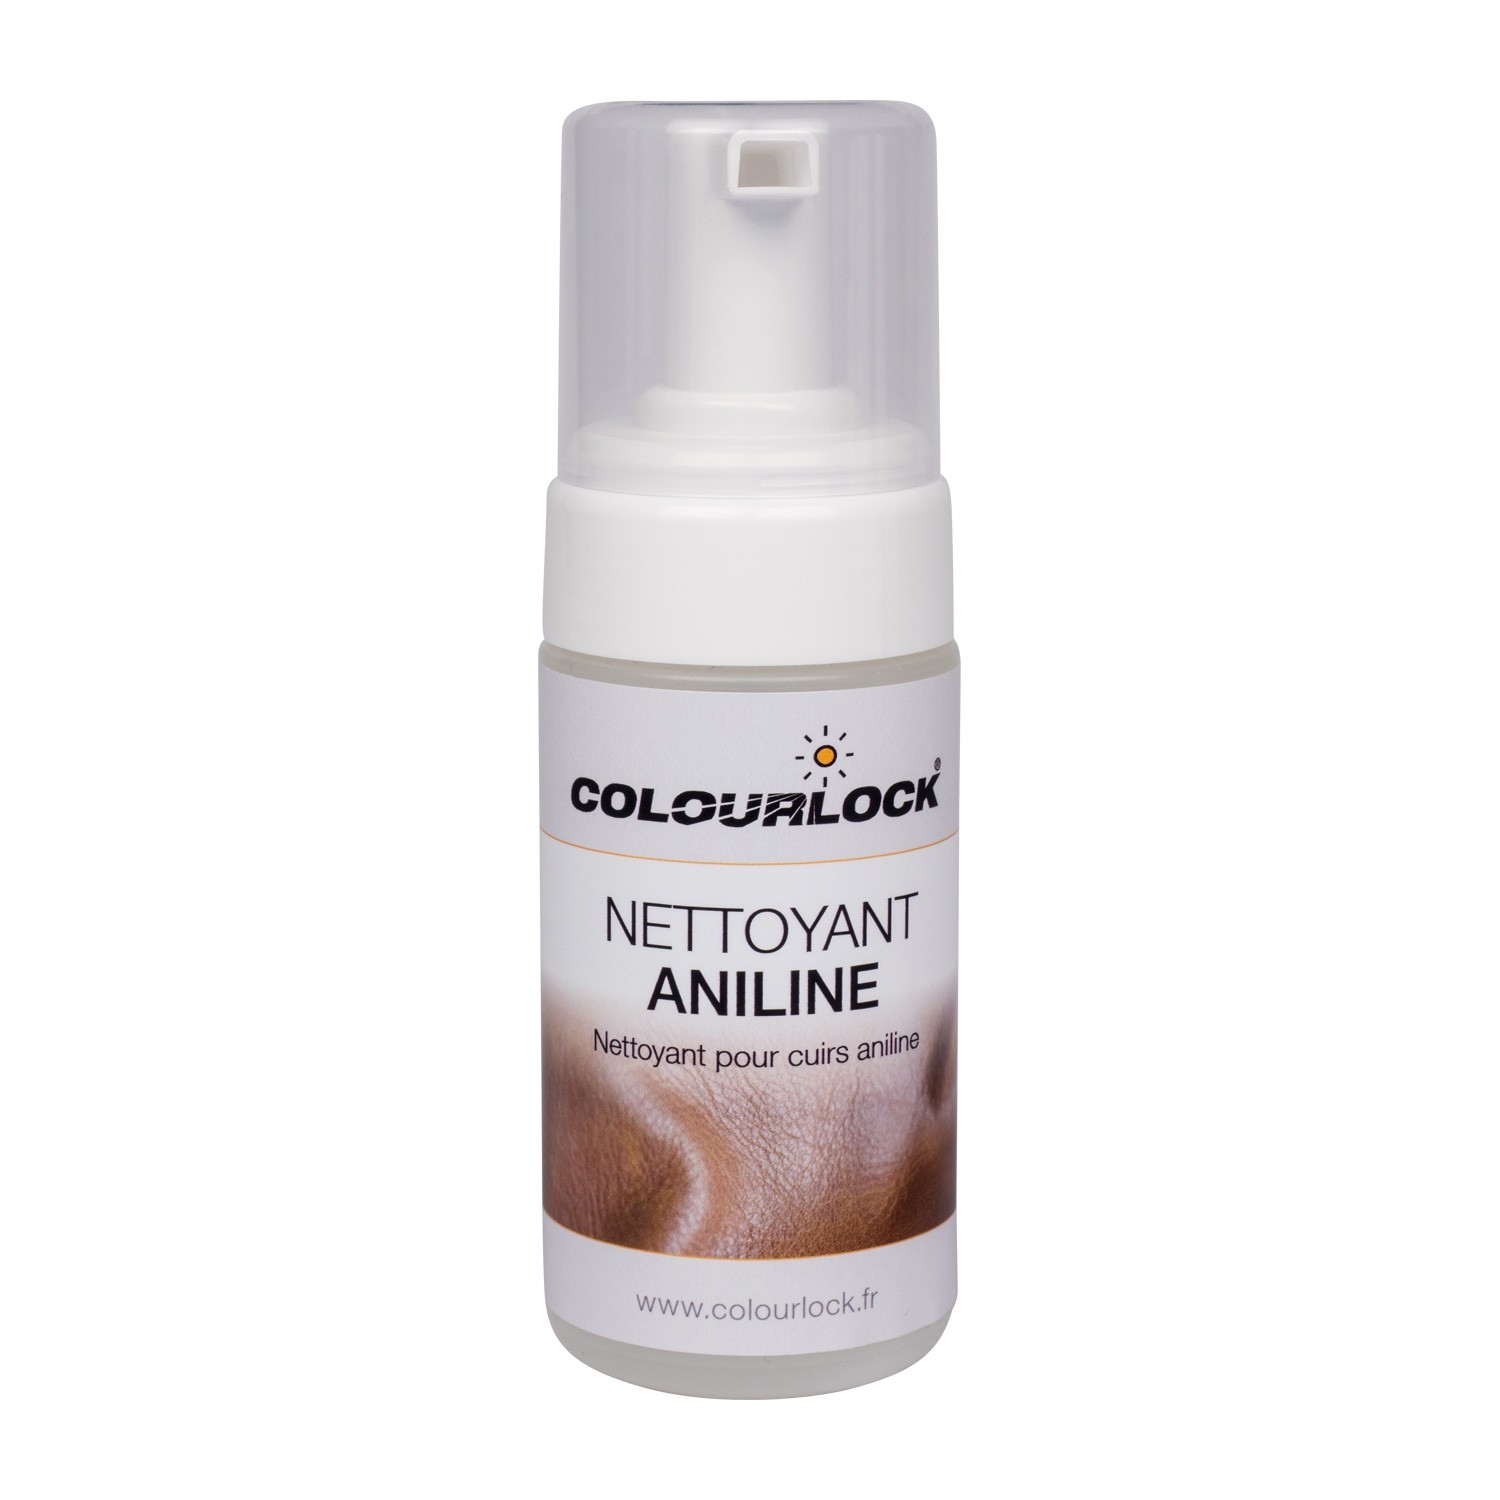 Nettoyant aniline COLOURLOCK, 125 ml